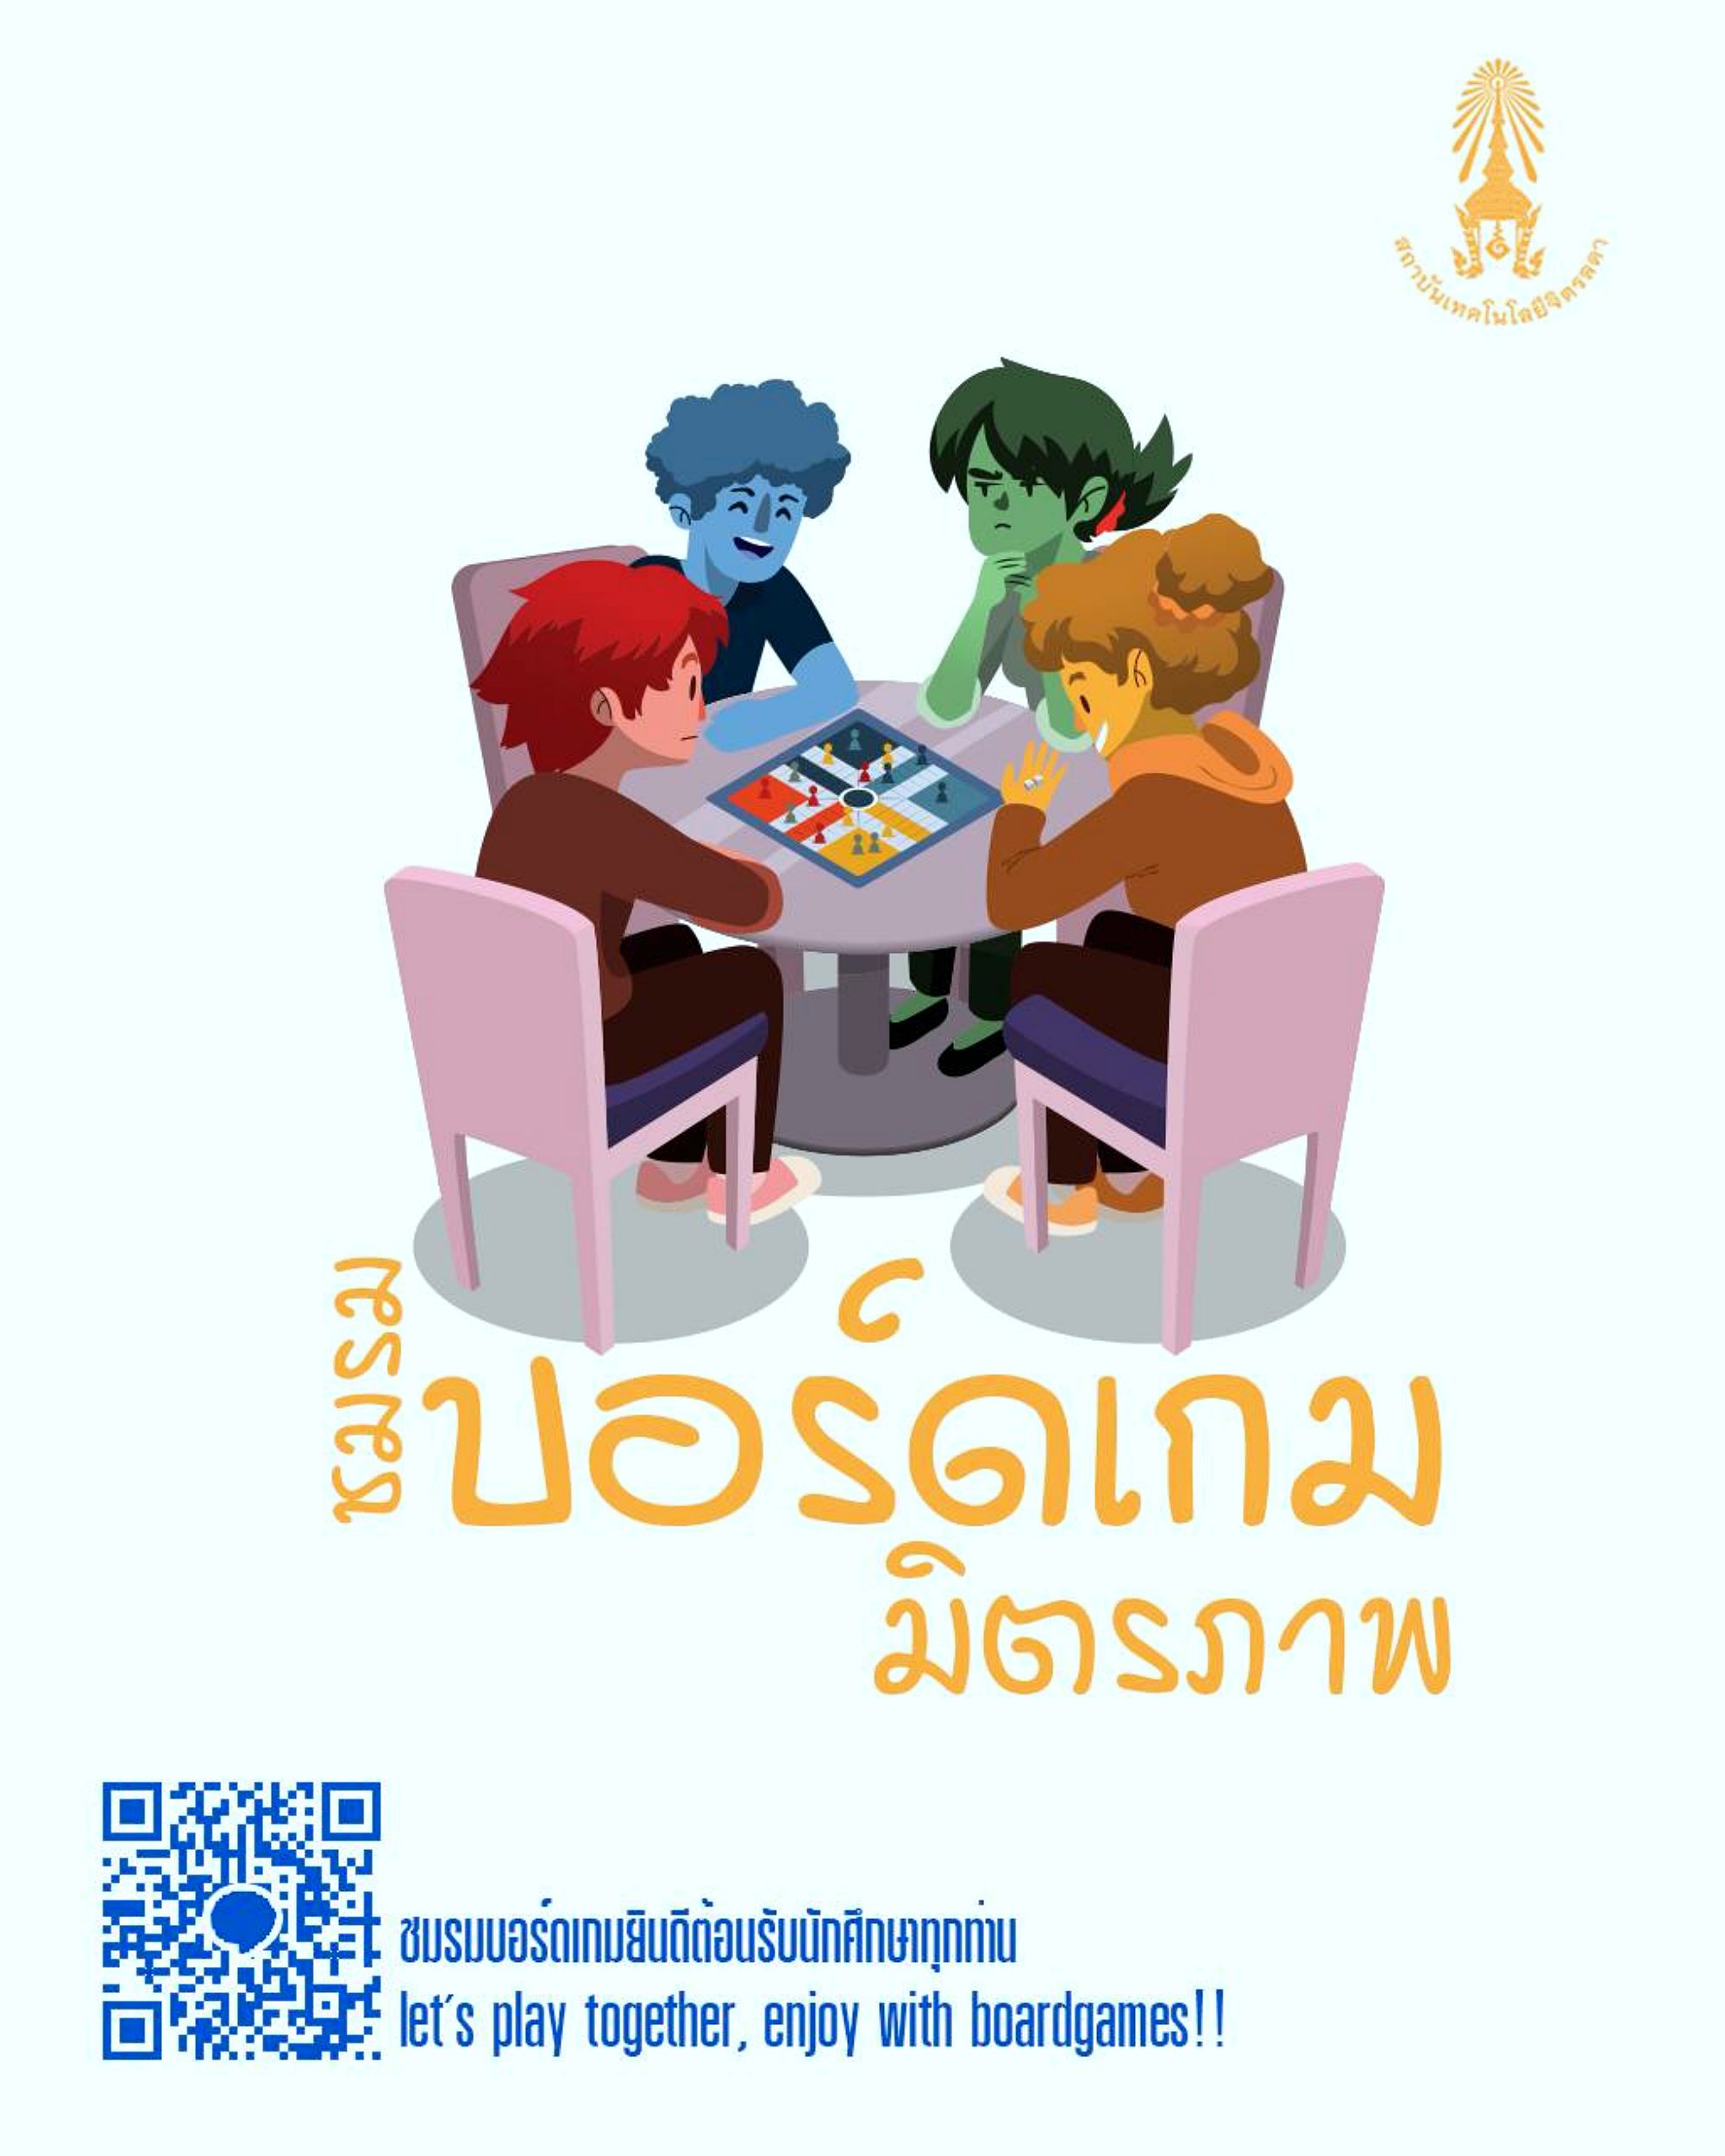 CDTI Friendship Board Game Club00004 สถาบันเทคโนโลยีจิตรลดา CDTI